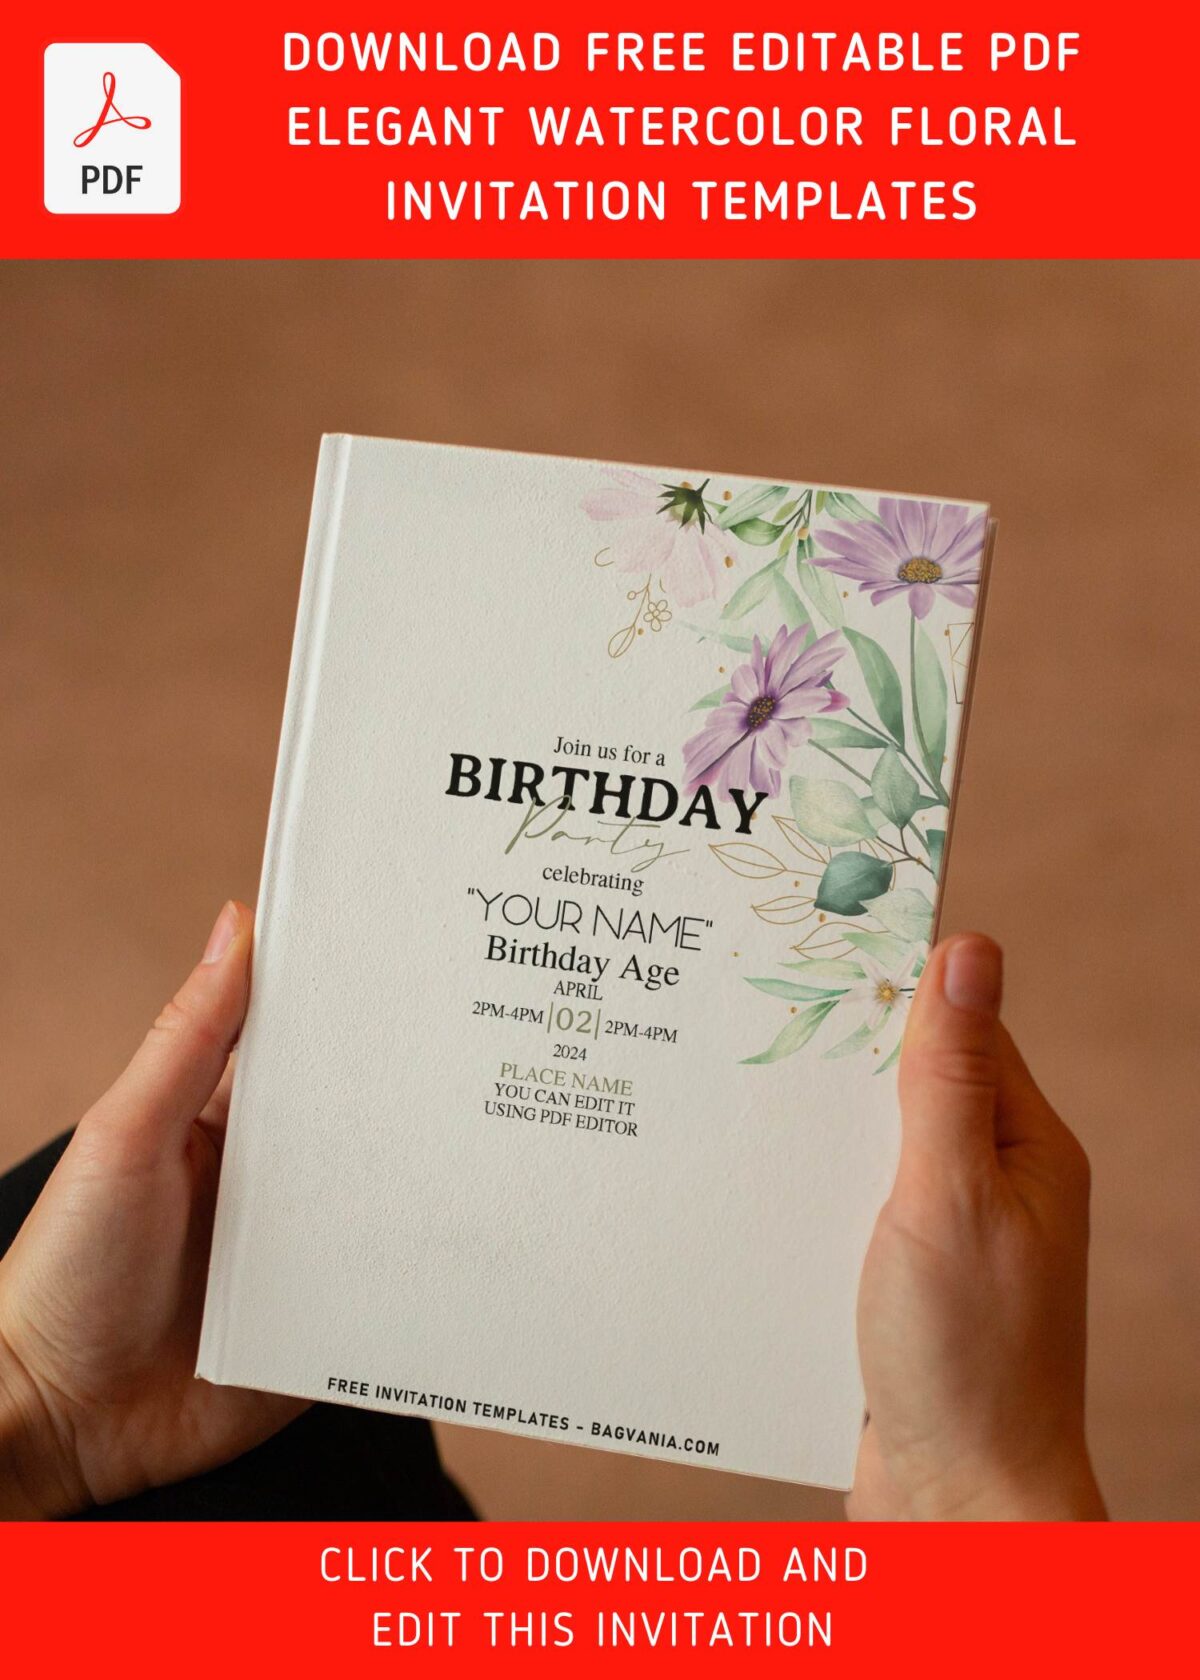 (Free Editable PDF) Spring Romance Birthday Invitation Templates with canvas white background